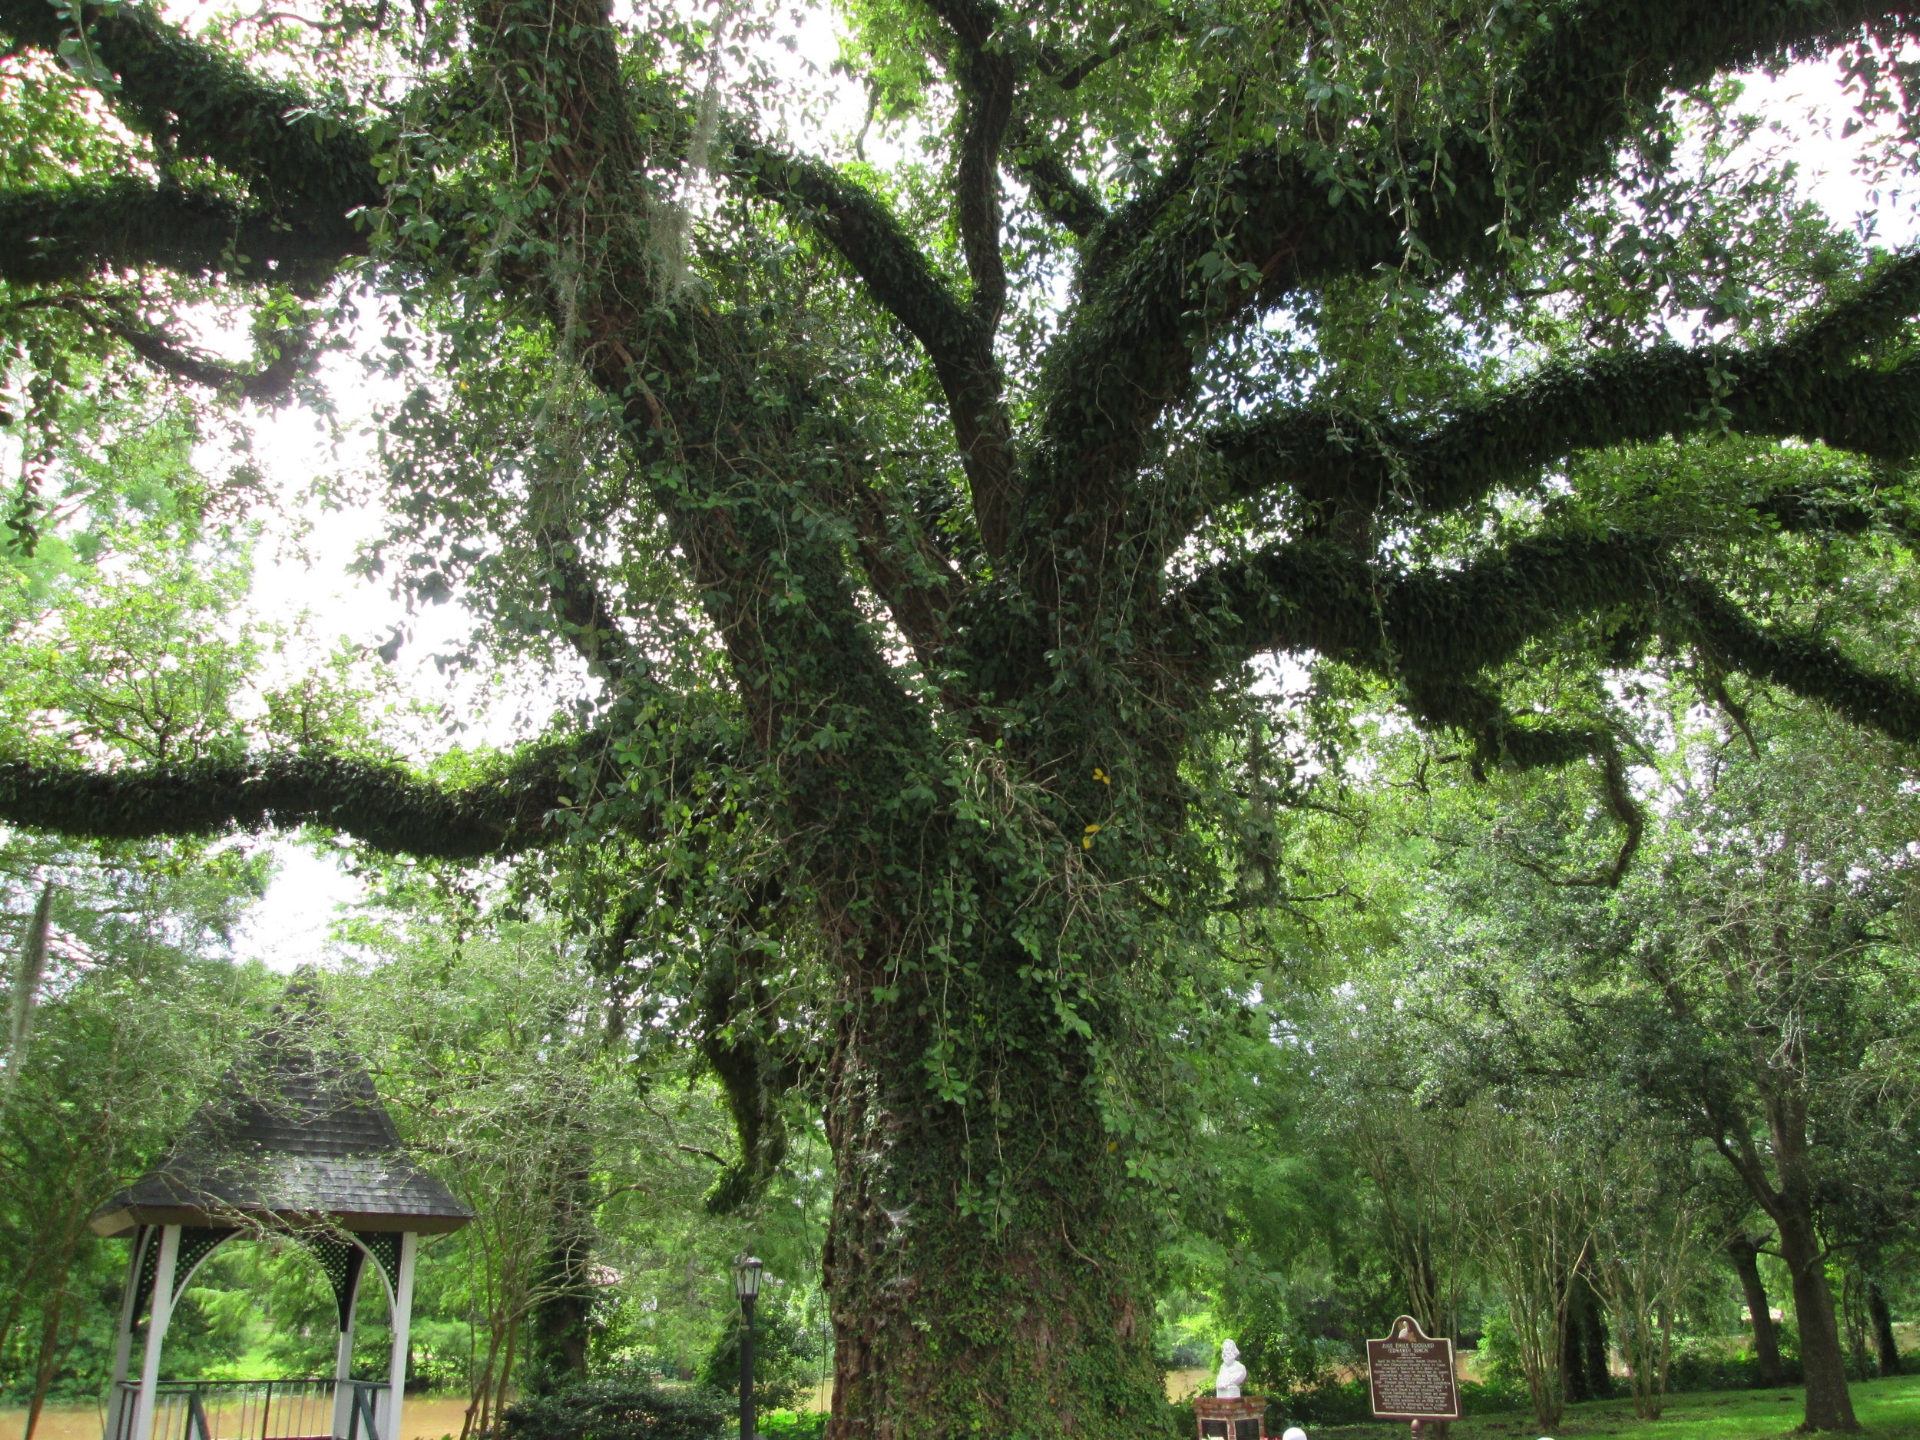  The Evangeline oak in St. Martinville 